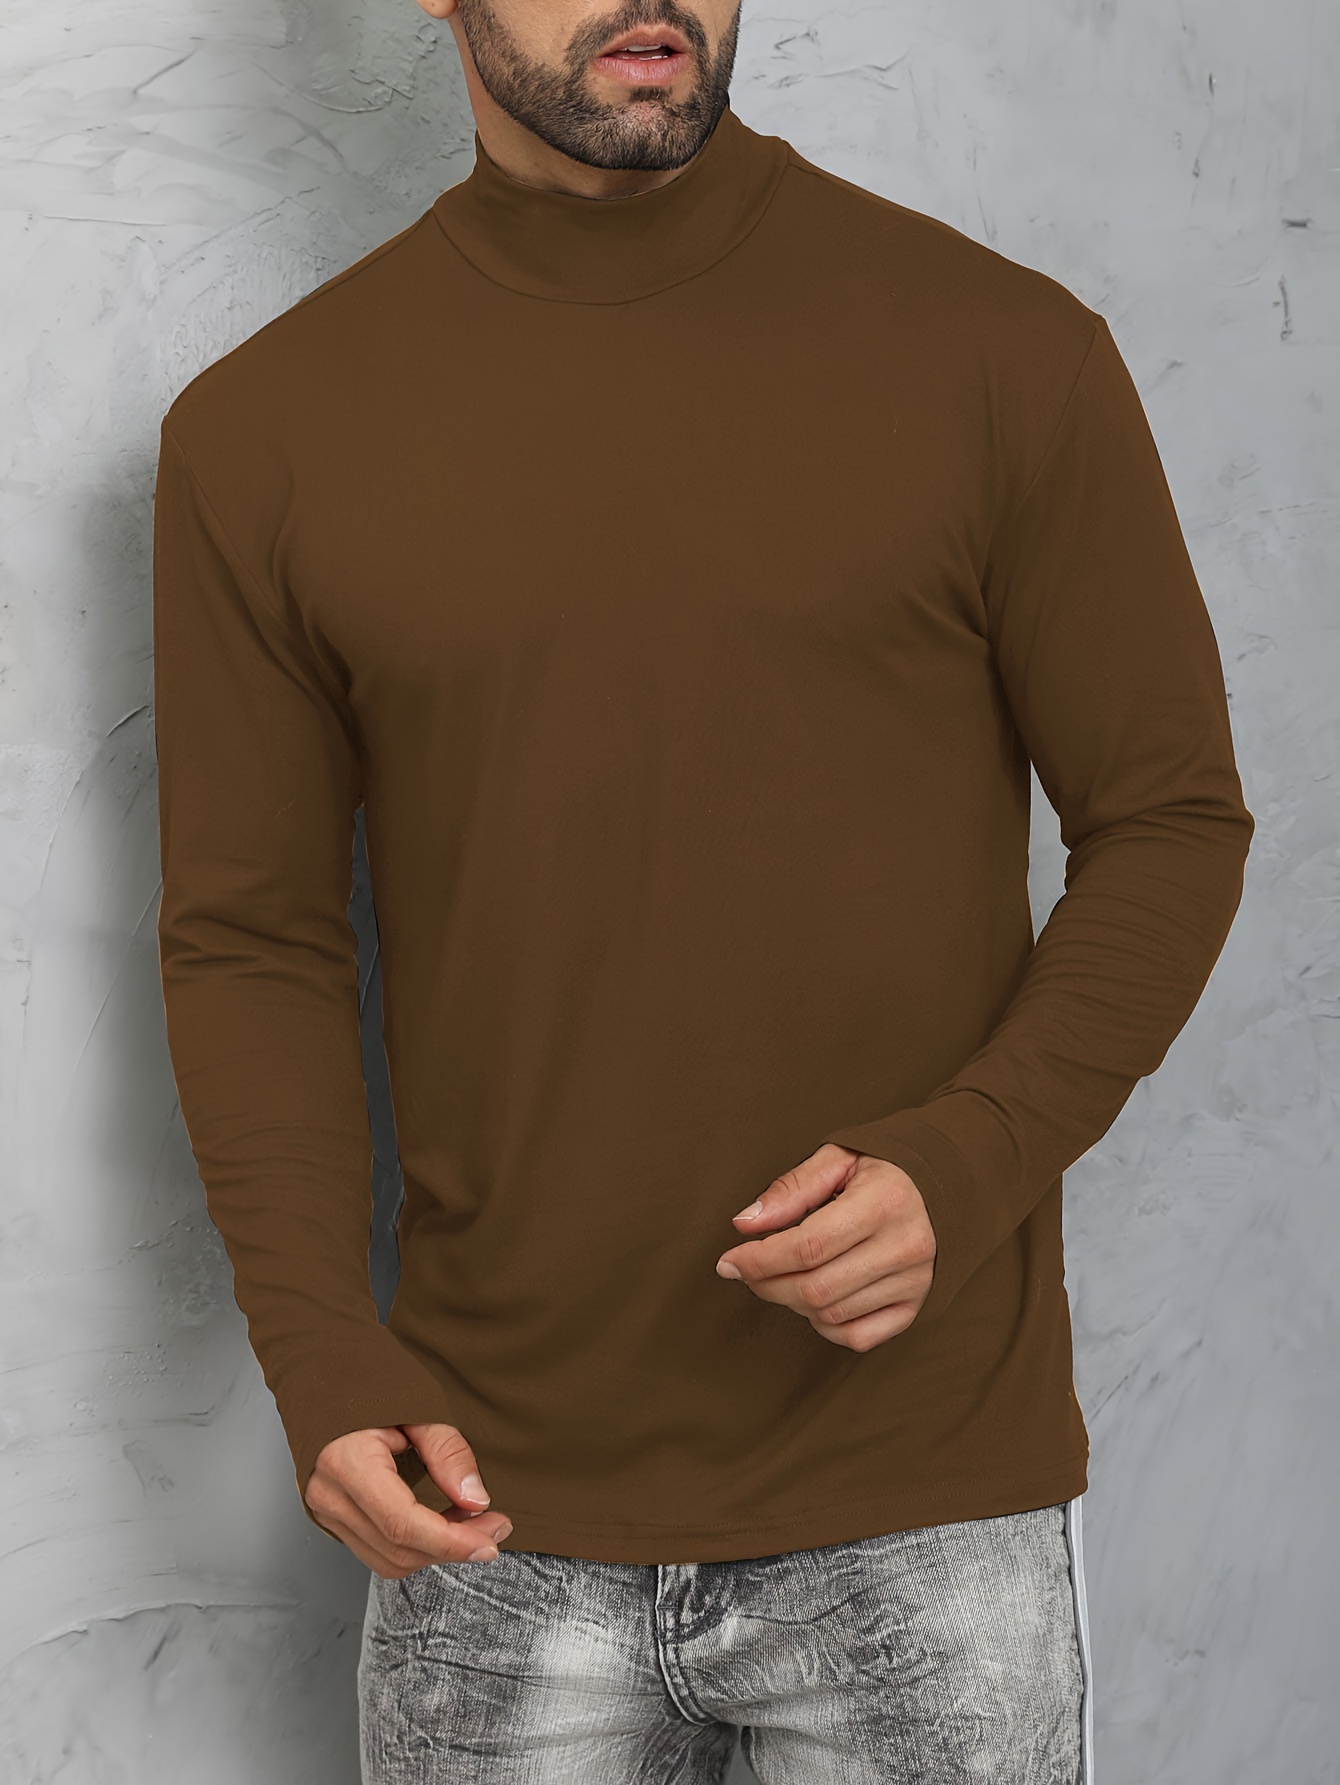 Camiseta manga larga invierno hombre color